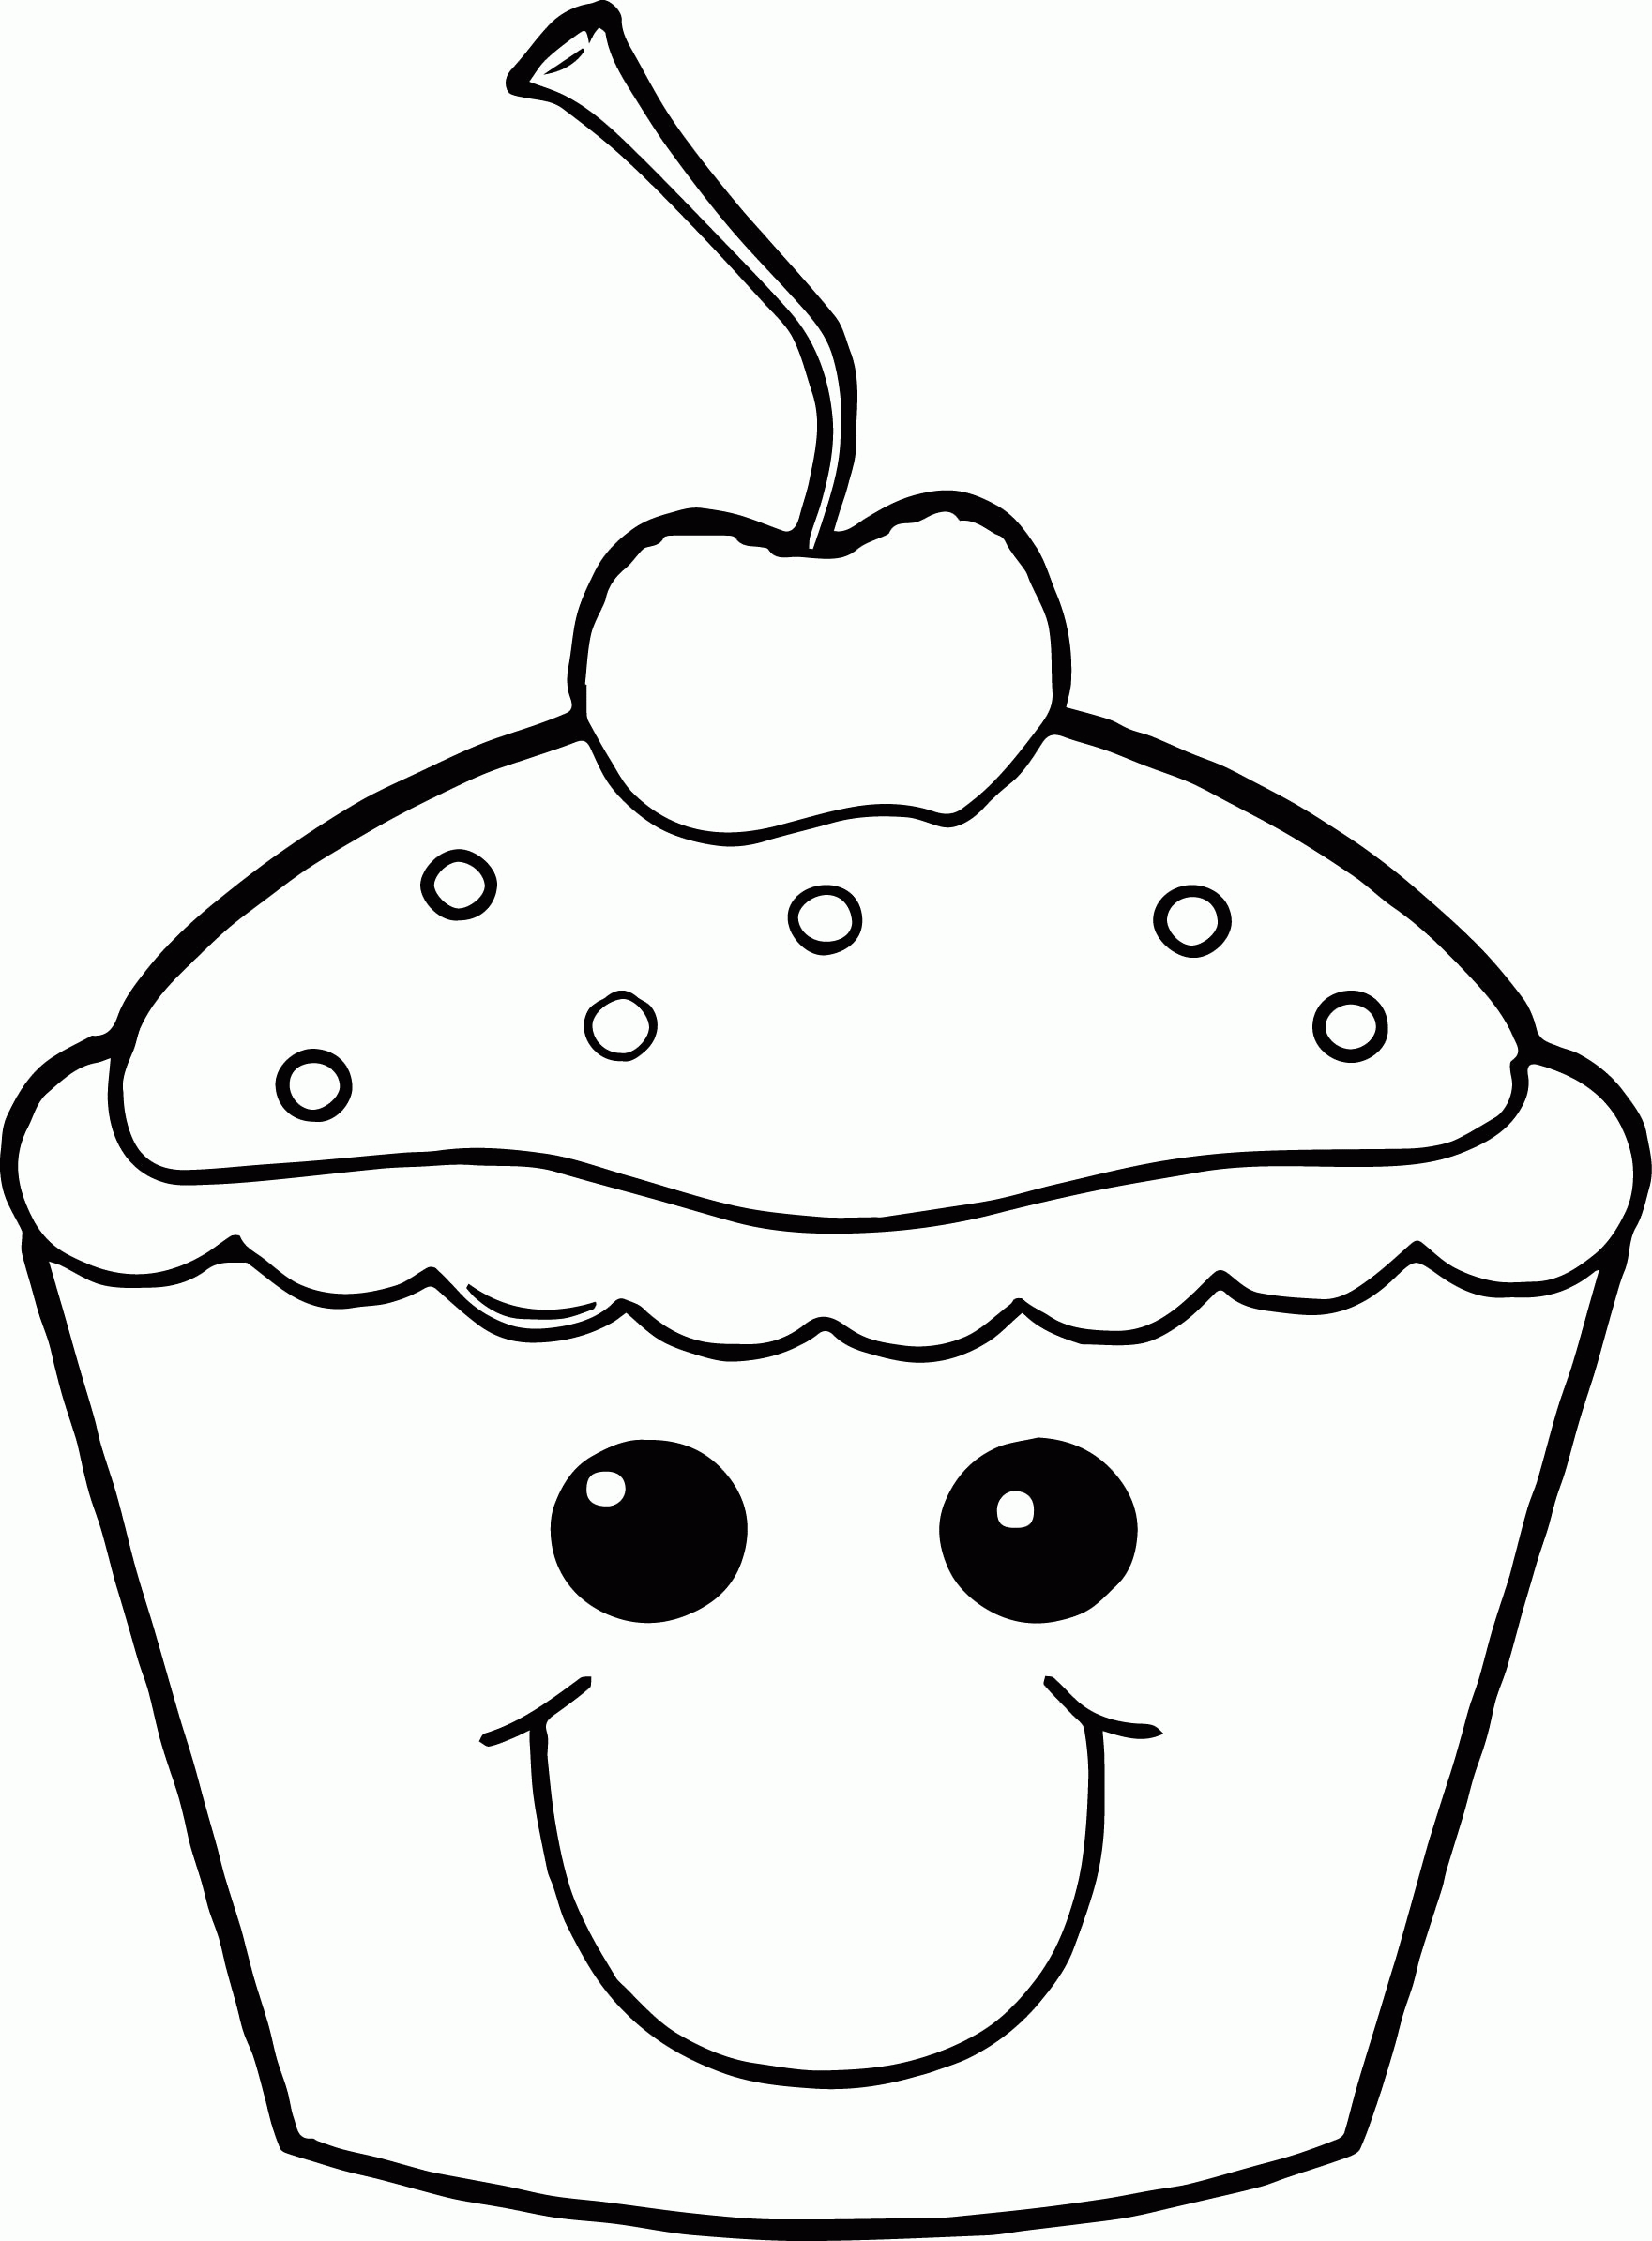 cupcake-desenho-para-colorir-kawaii-black-and-white-cupcake-cupcake